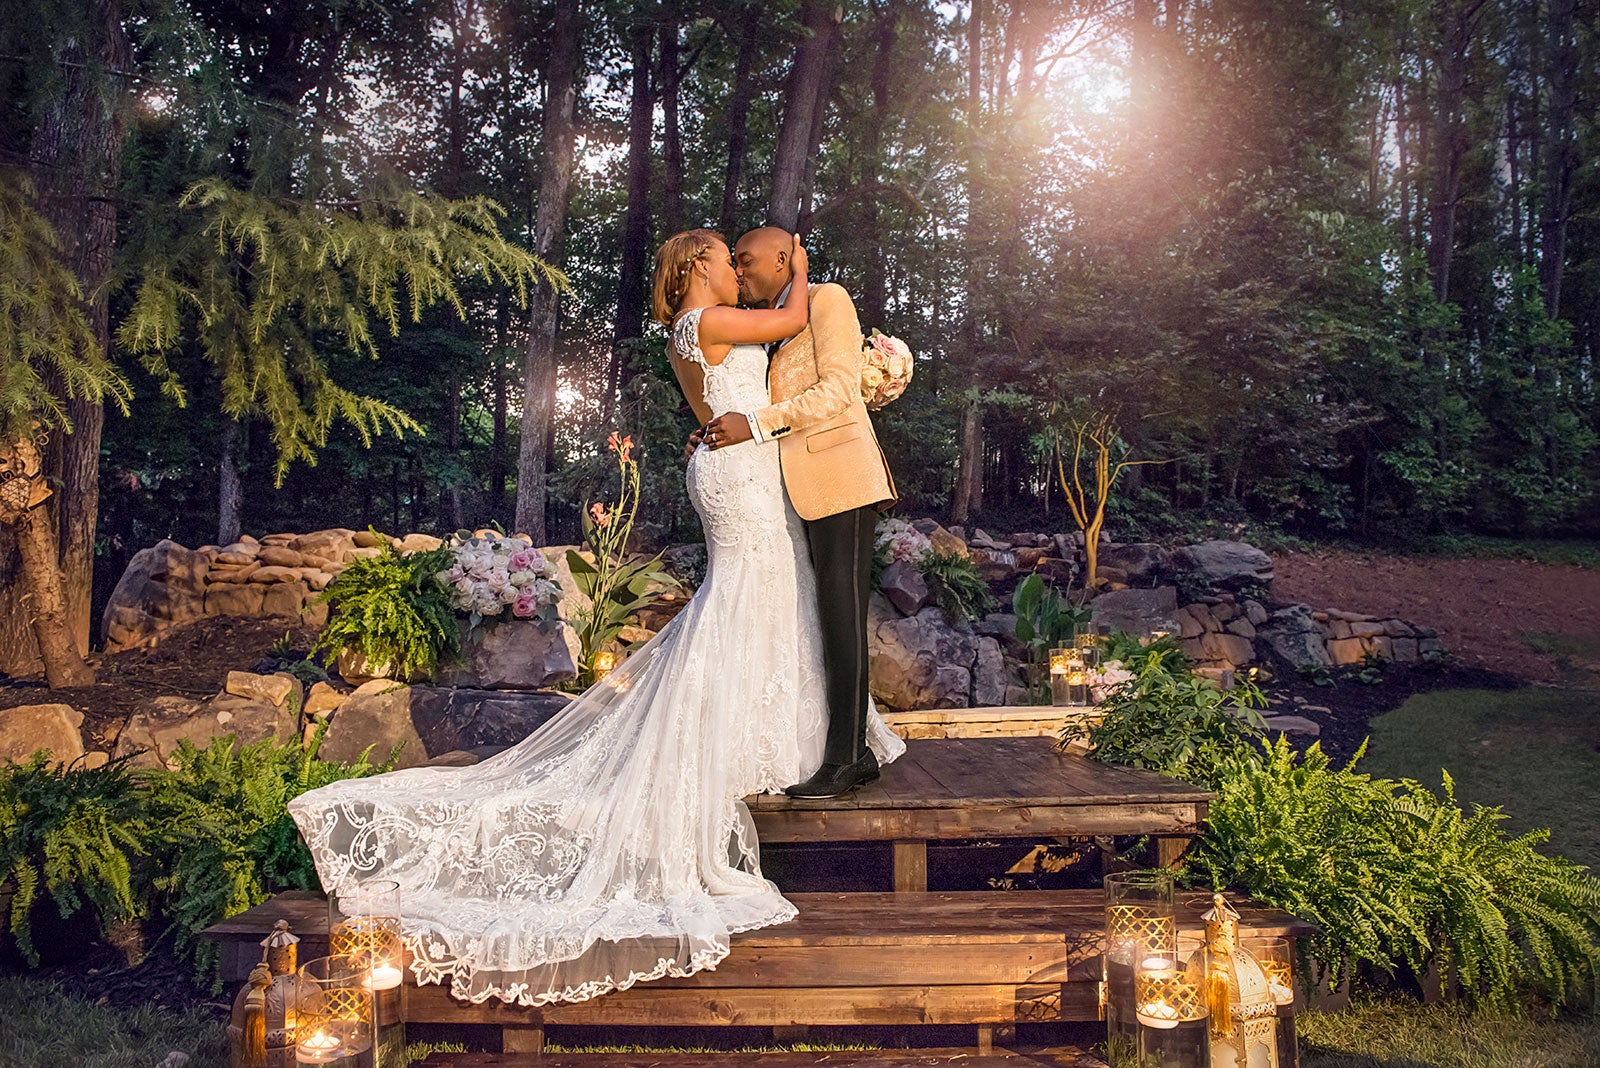 https://www.essence.com/wp-content/uploads/2015/08/images/2015/08/29/will-packer-wedding-photo-a22.jpg